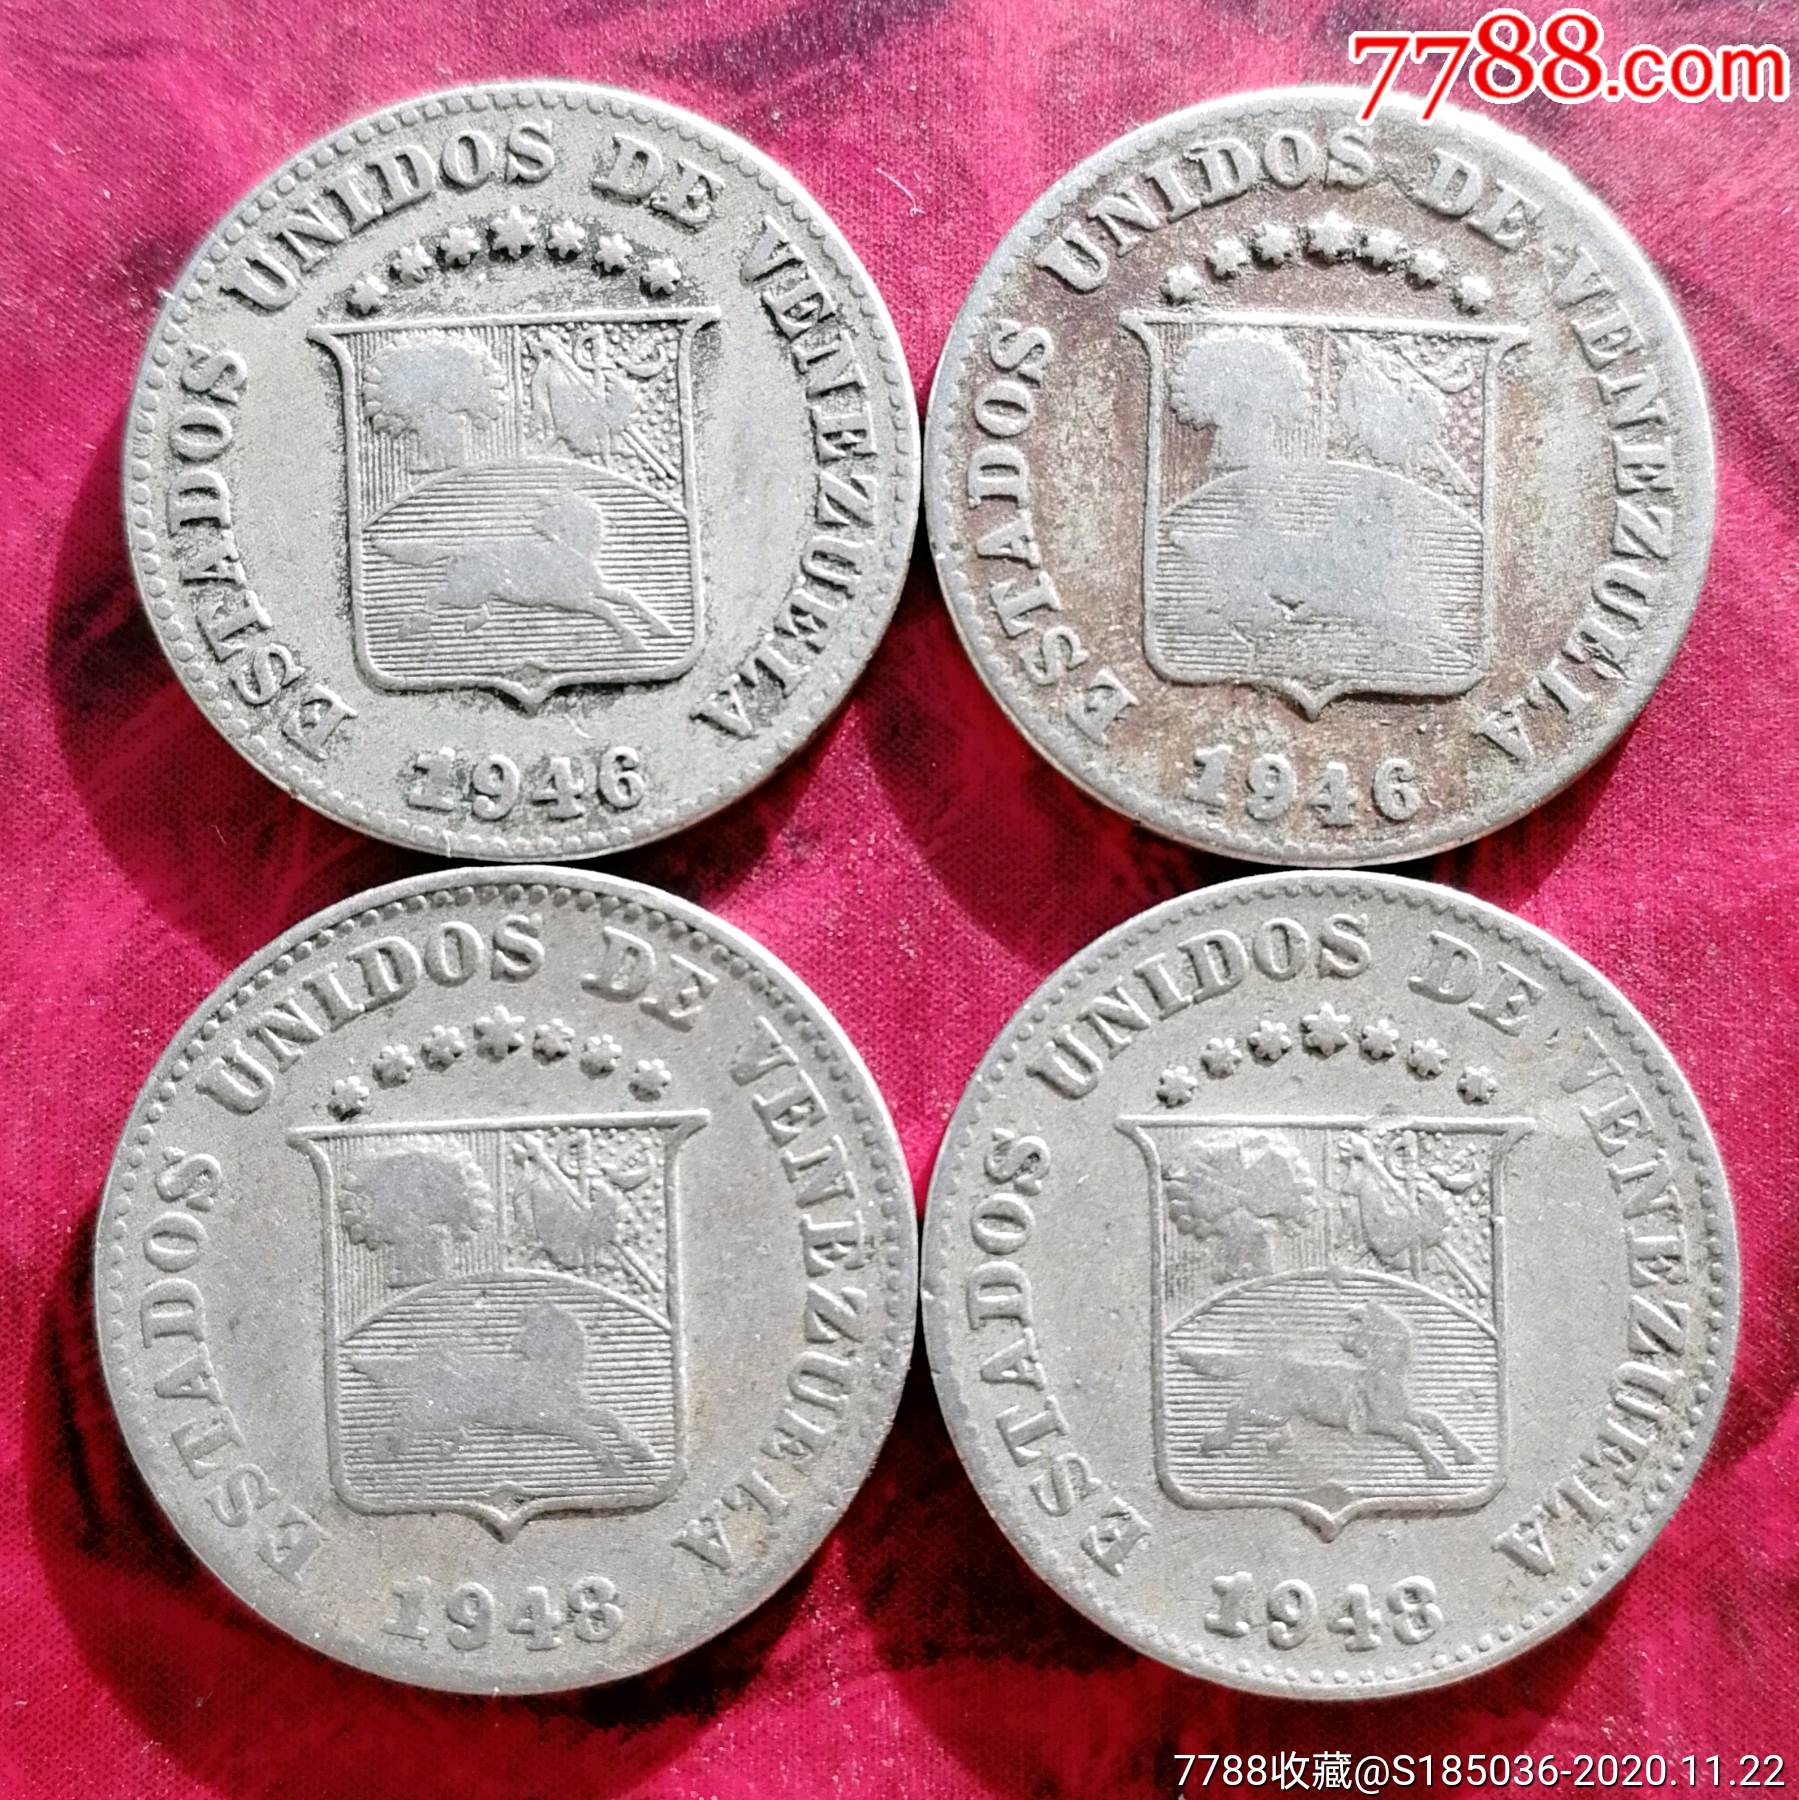 19461948年委内瑞拉5分硬币